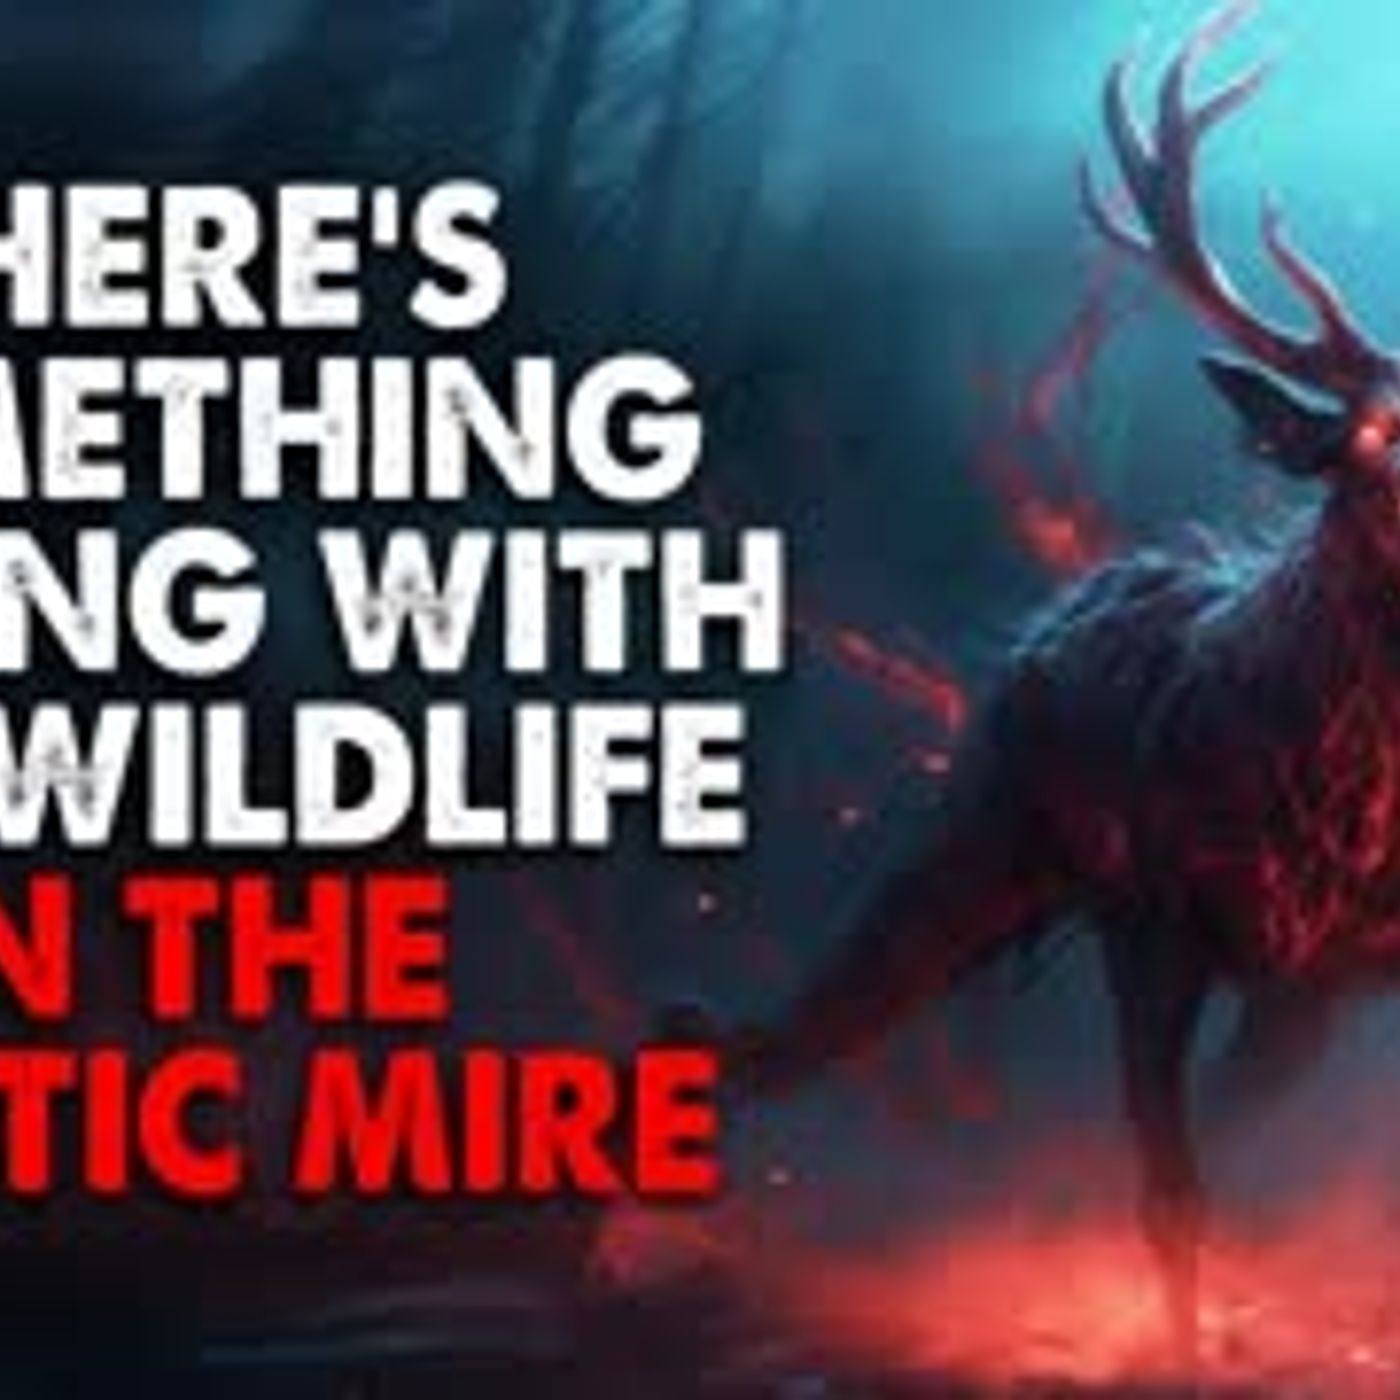 ”The Unnatural Wildlife of the Arctic Mire” Creepypasta